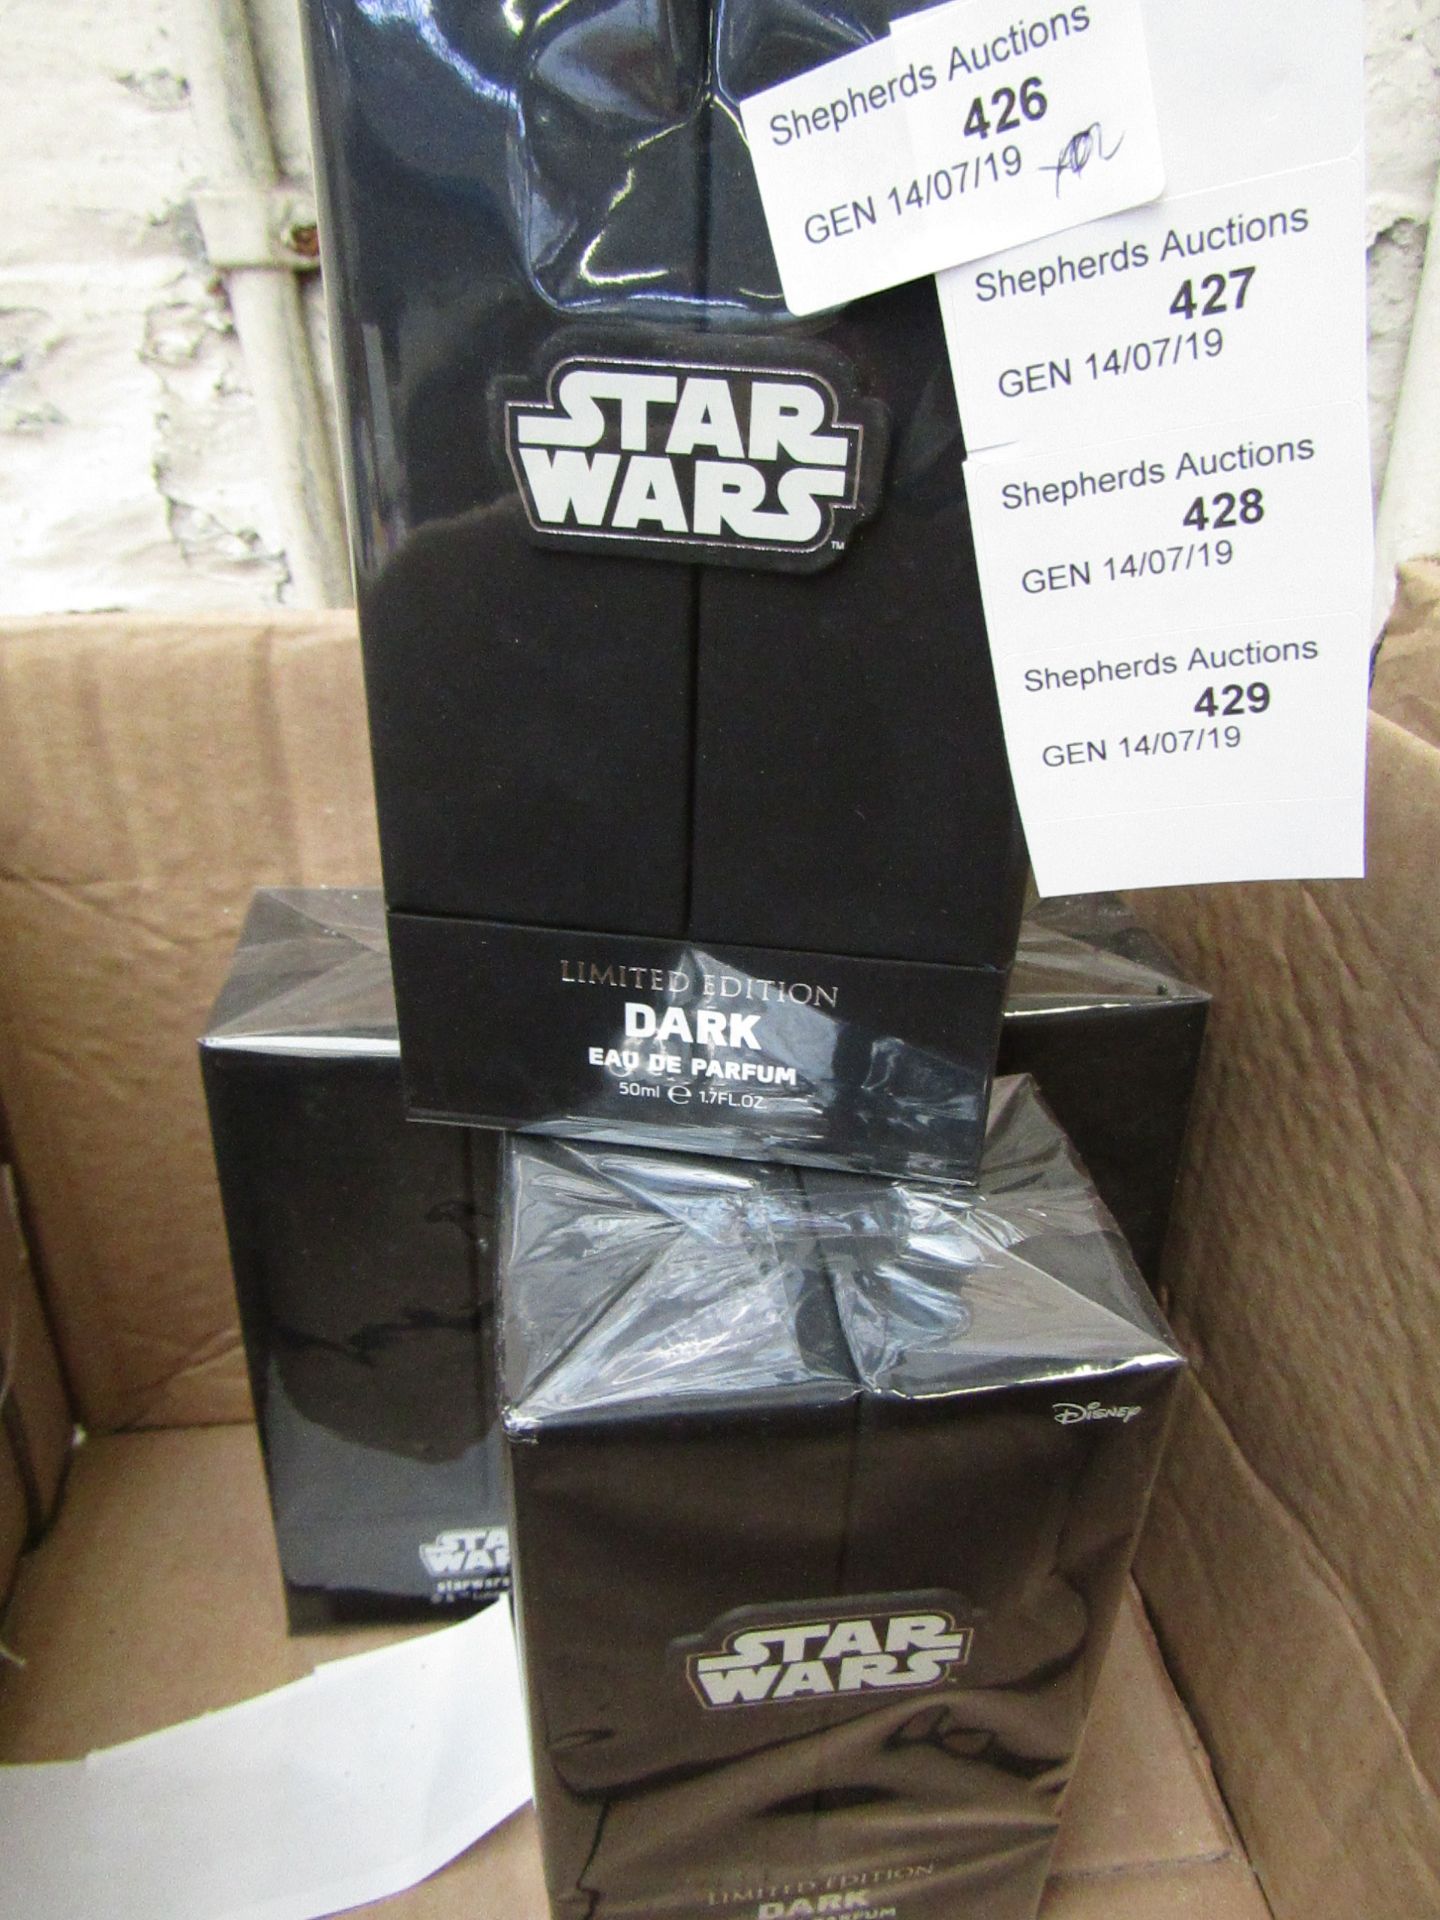 Star Wars Limited Edition Dark Eau De Parfum 50 MLS, New in packaging